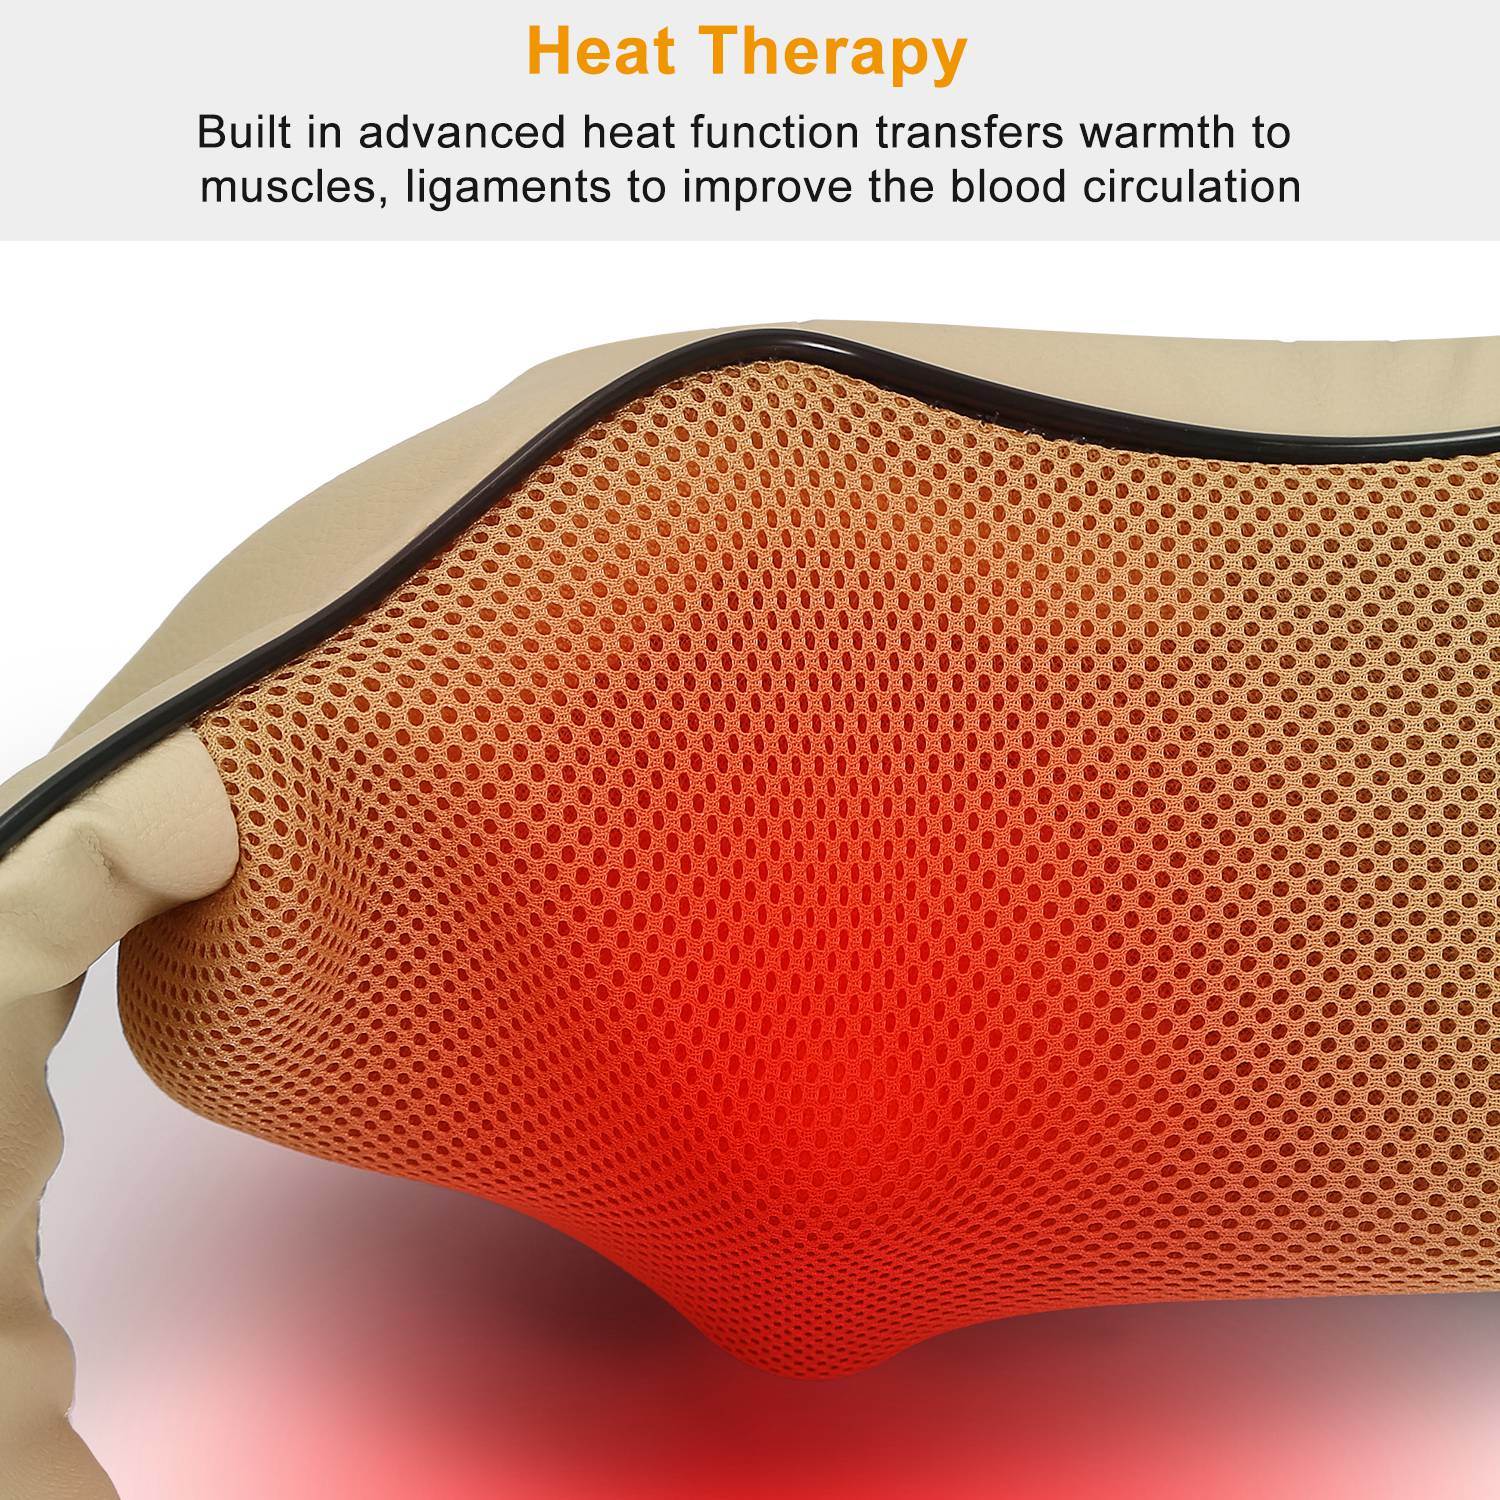 Neck Shoulder Massager Electric Back Massage Cape with Heat Deep - home • office • health